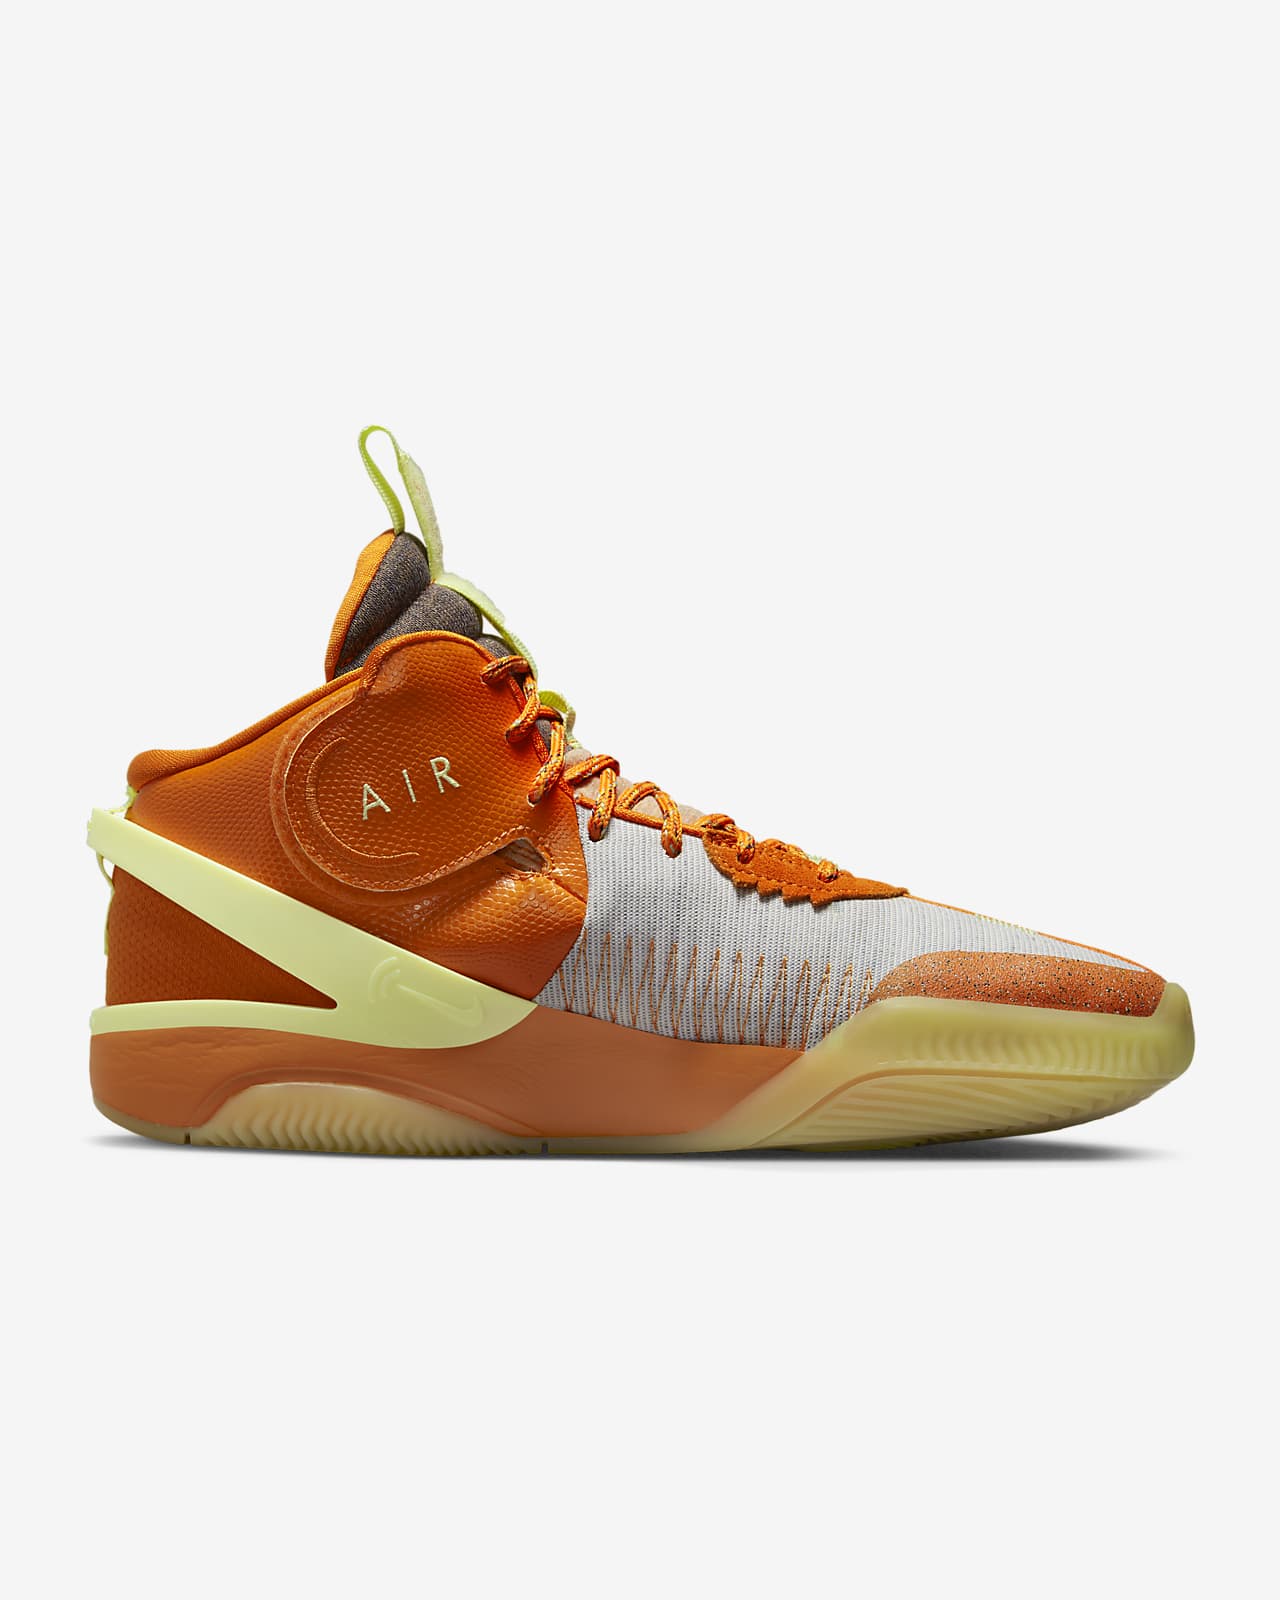 Nike Air Deldon "Hoodie" Basketball Shoes